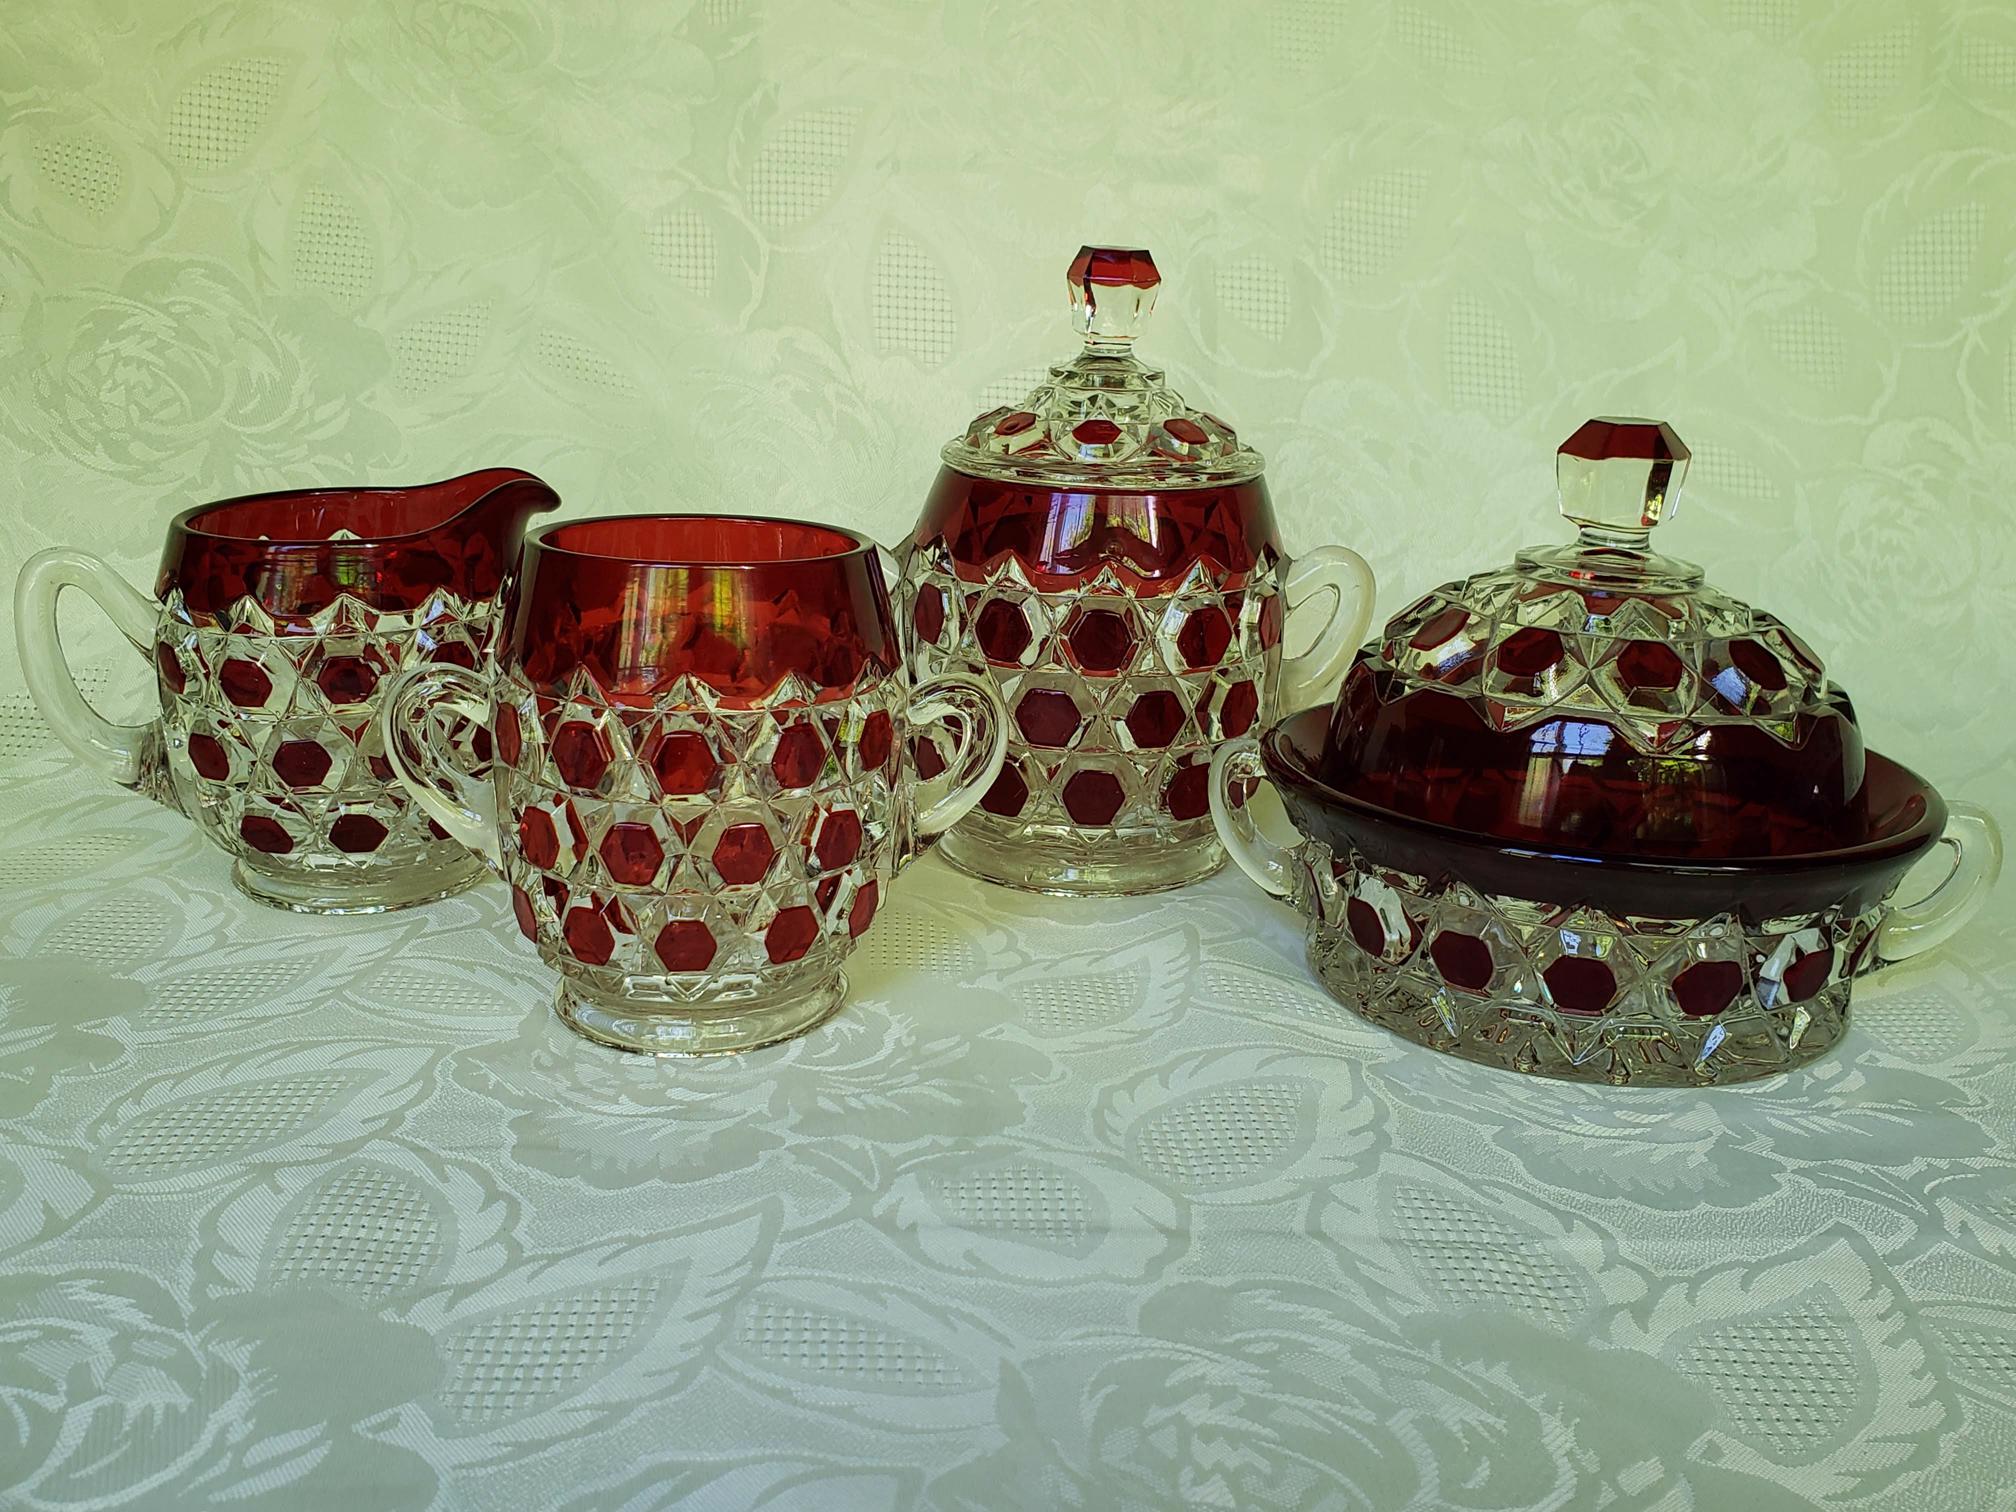 https://serstyle.com/wp-content/uploads/2019/05/Vintage-Czech-Bohemian-Style-Cut-to-Clear-Cranberry-Glass-Set.jpg